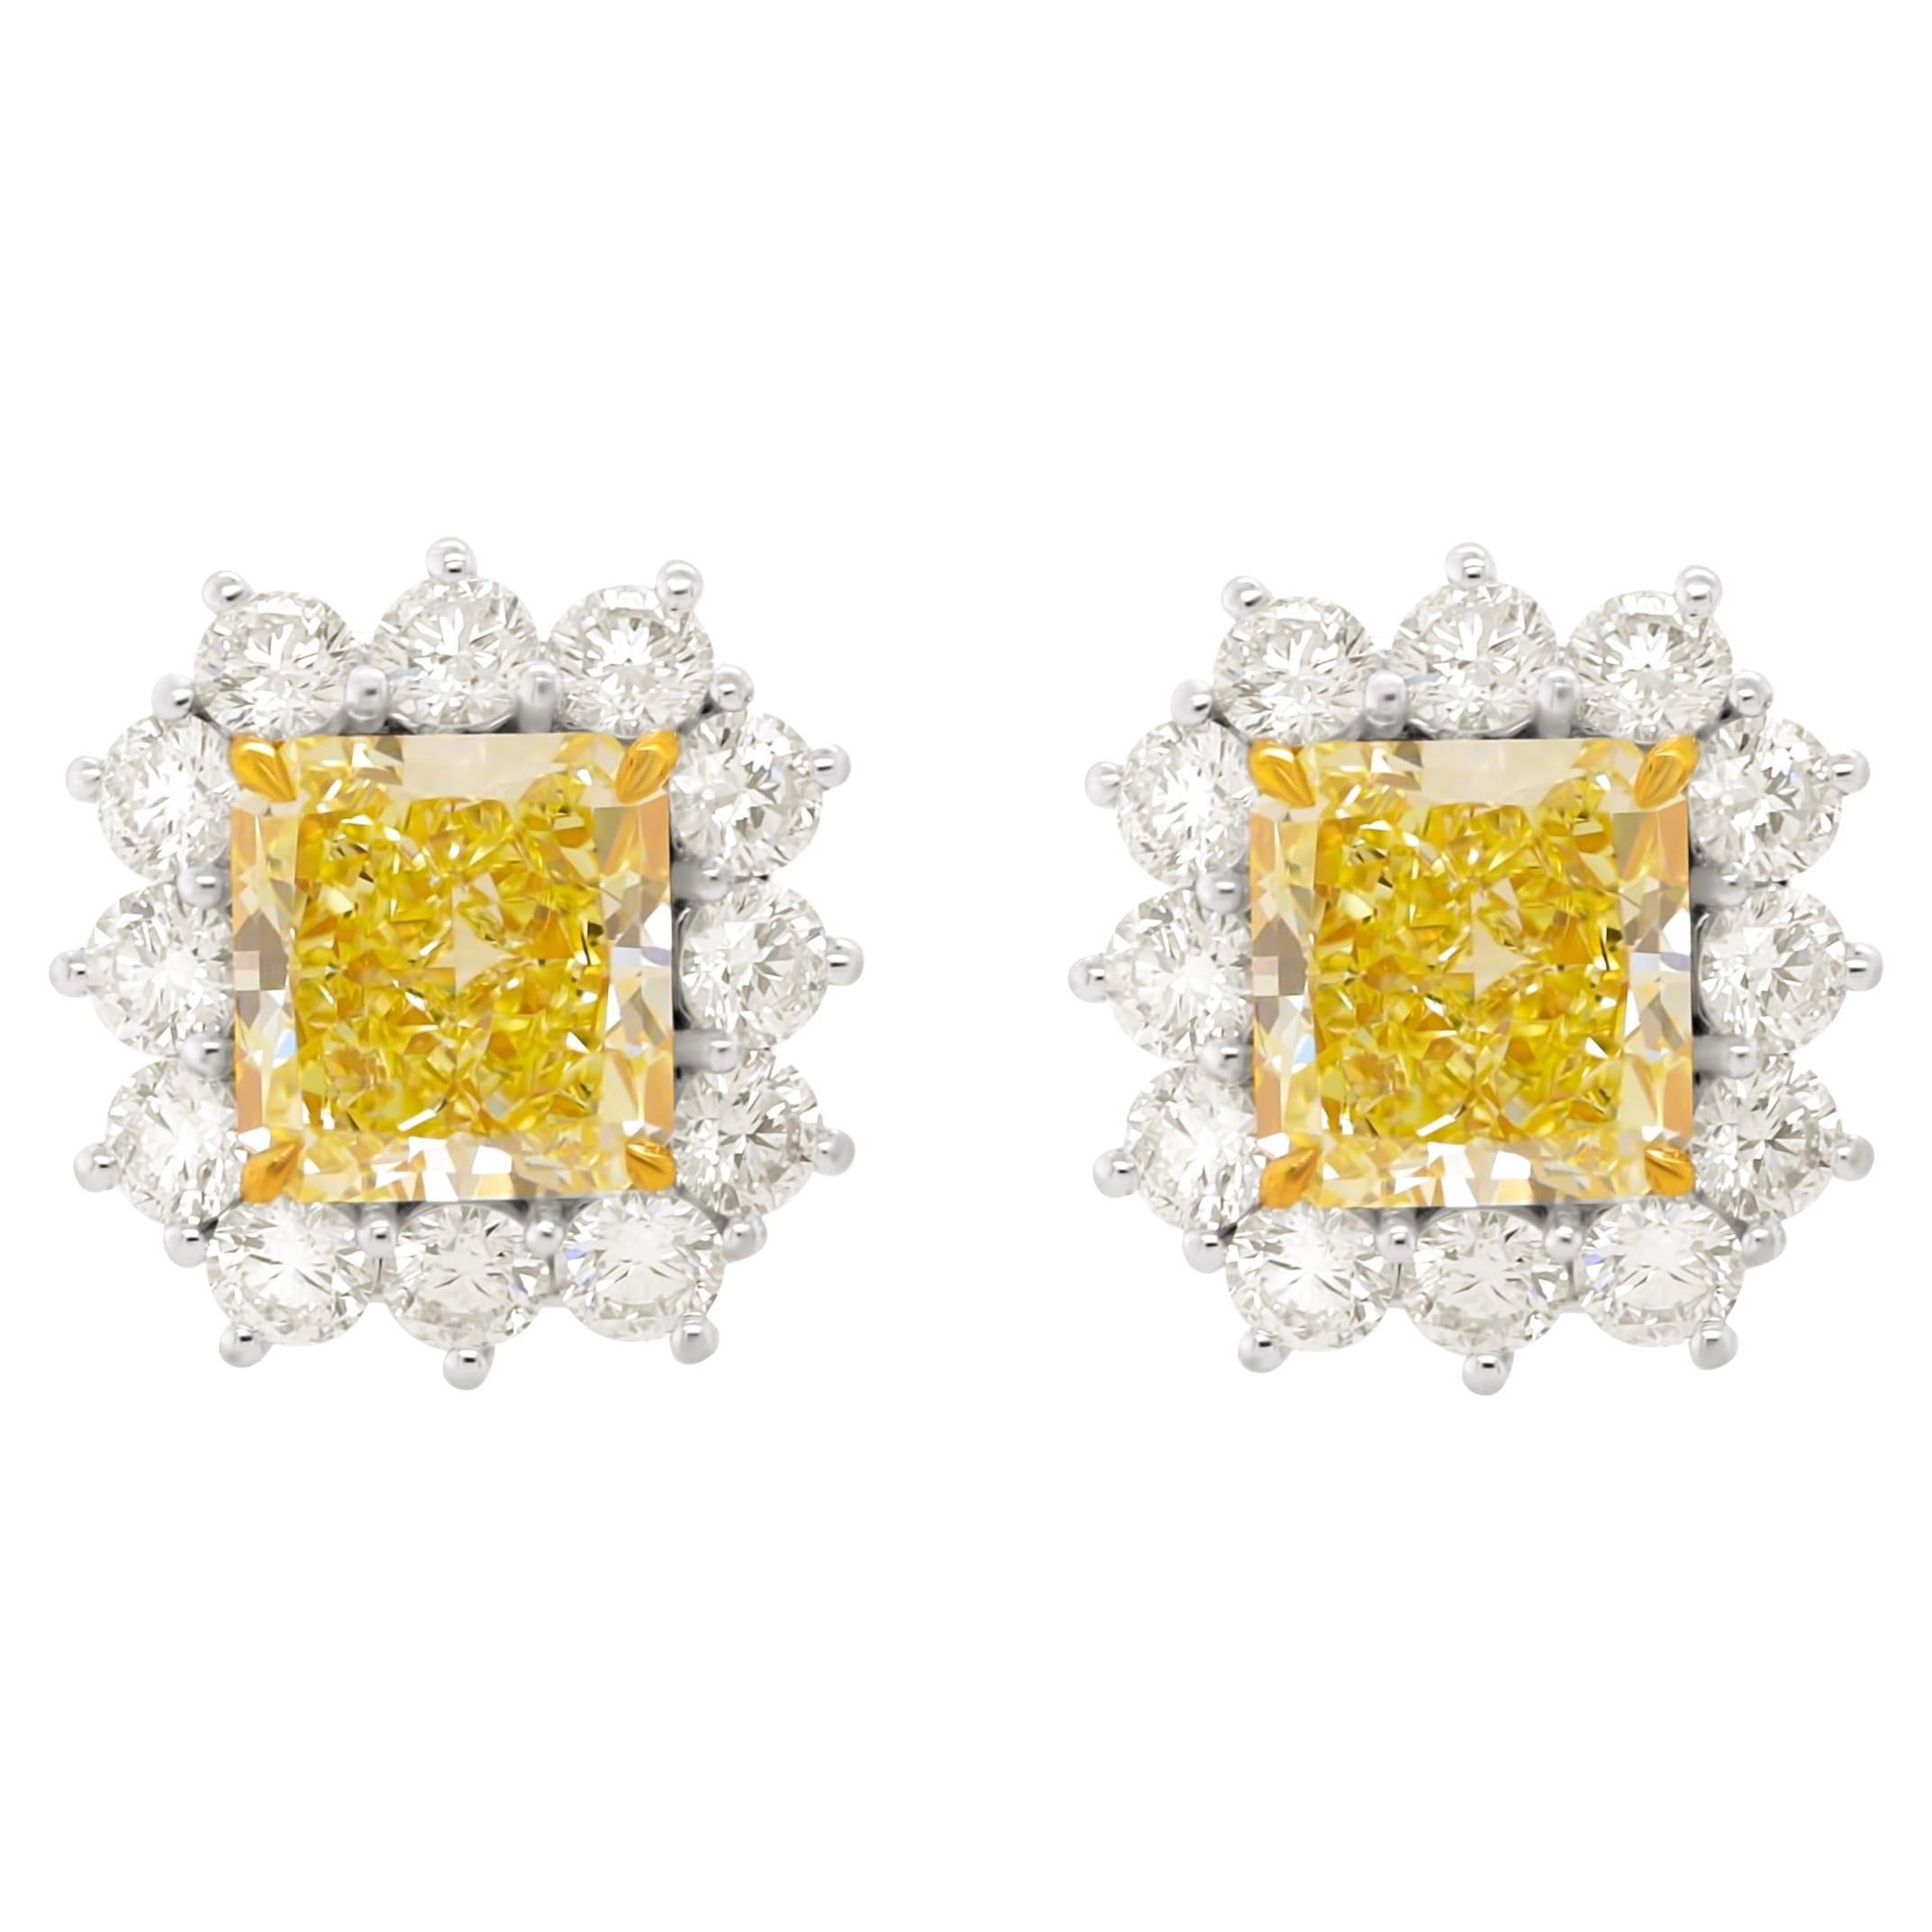 Diana M. 9.79 Carat Yellow Diamond Stud Earrings For Sale